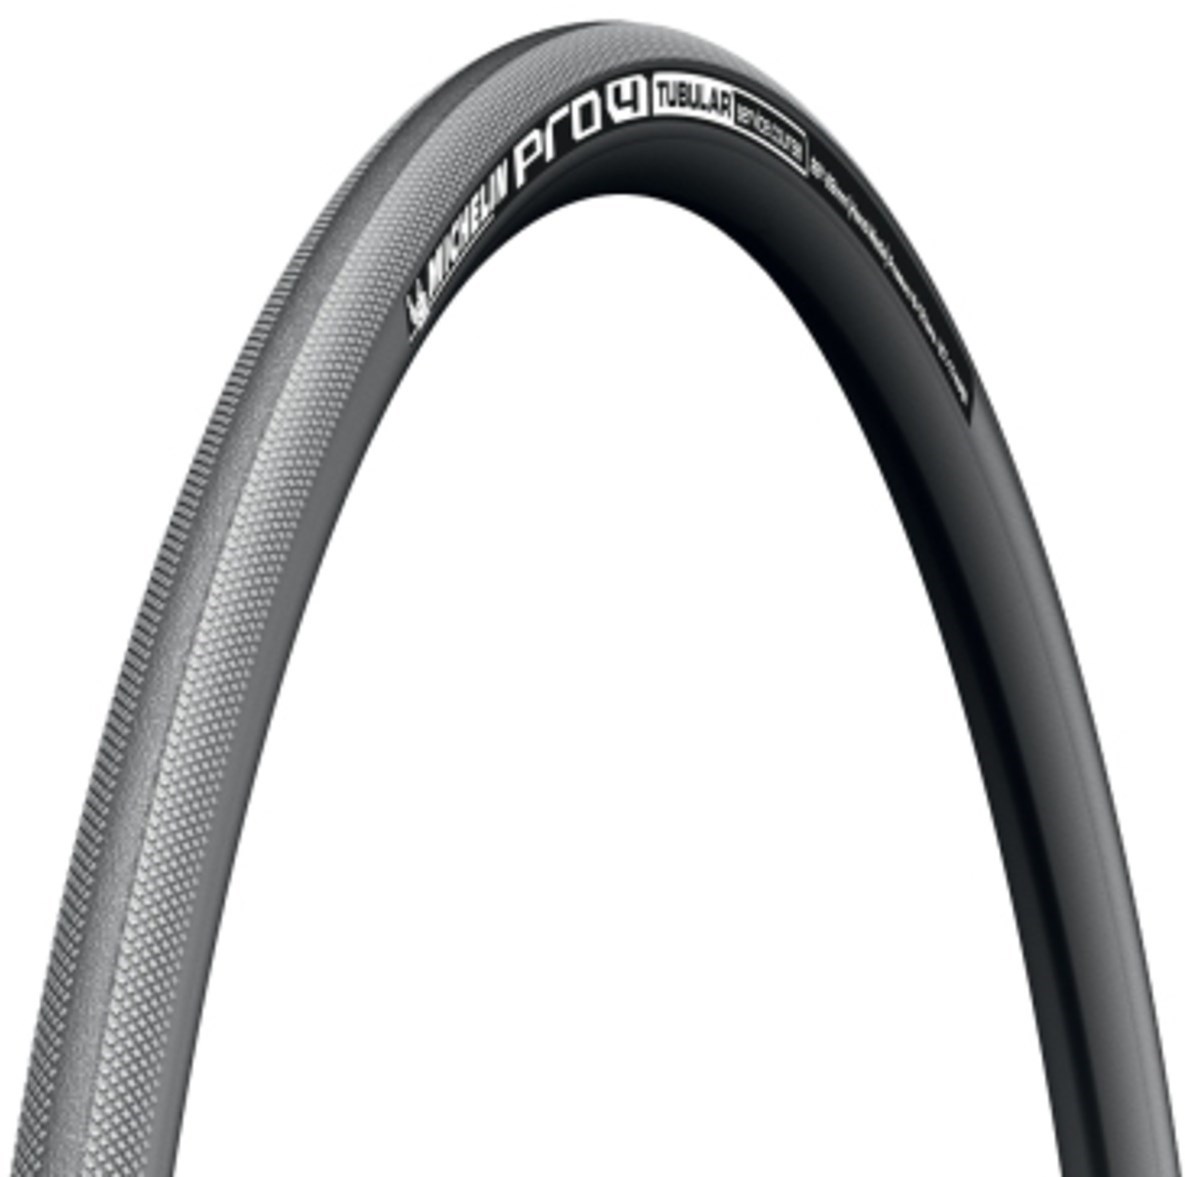 Michelin Pro 4 Tubular Road Bike Tyre product image